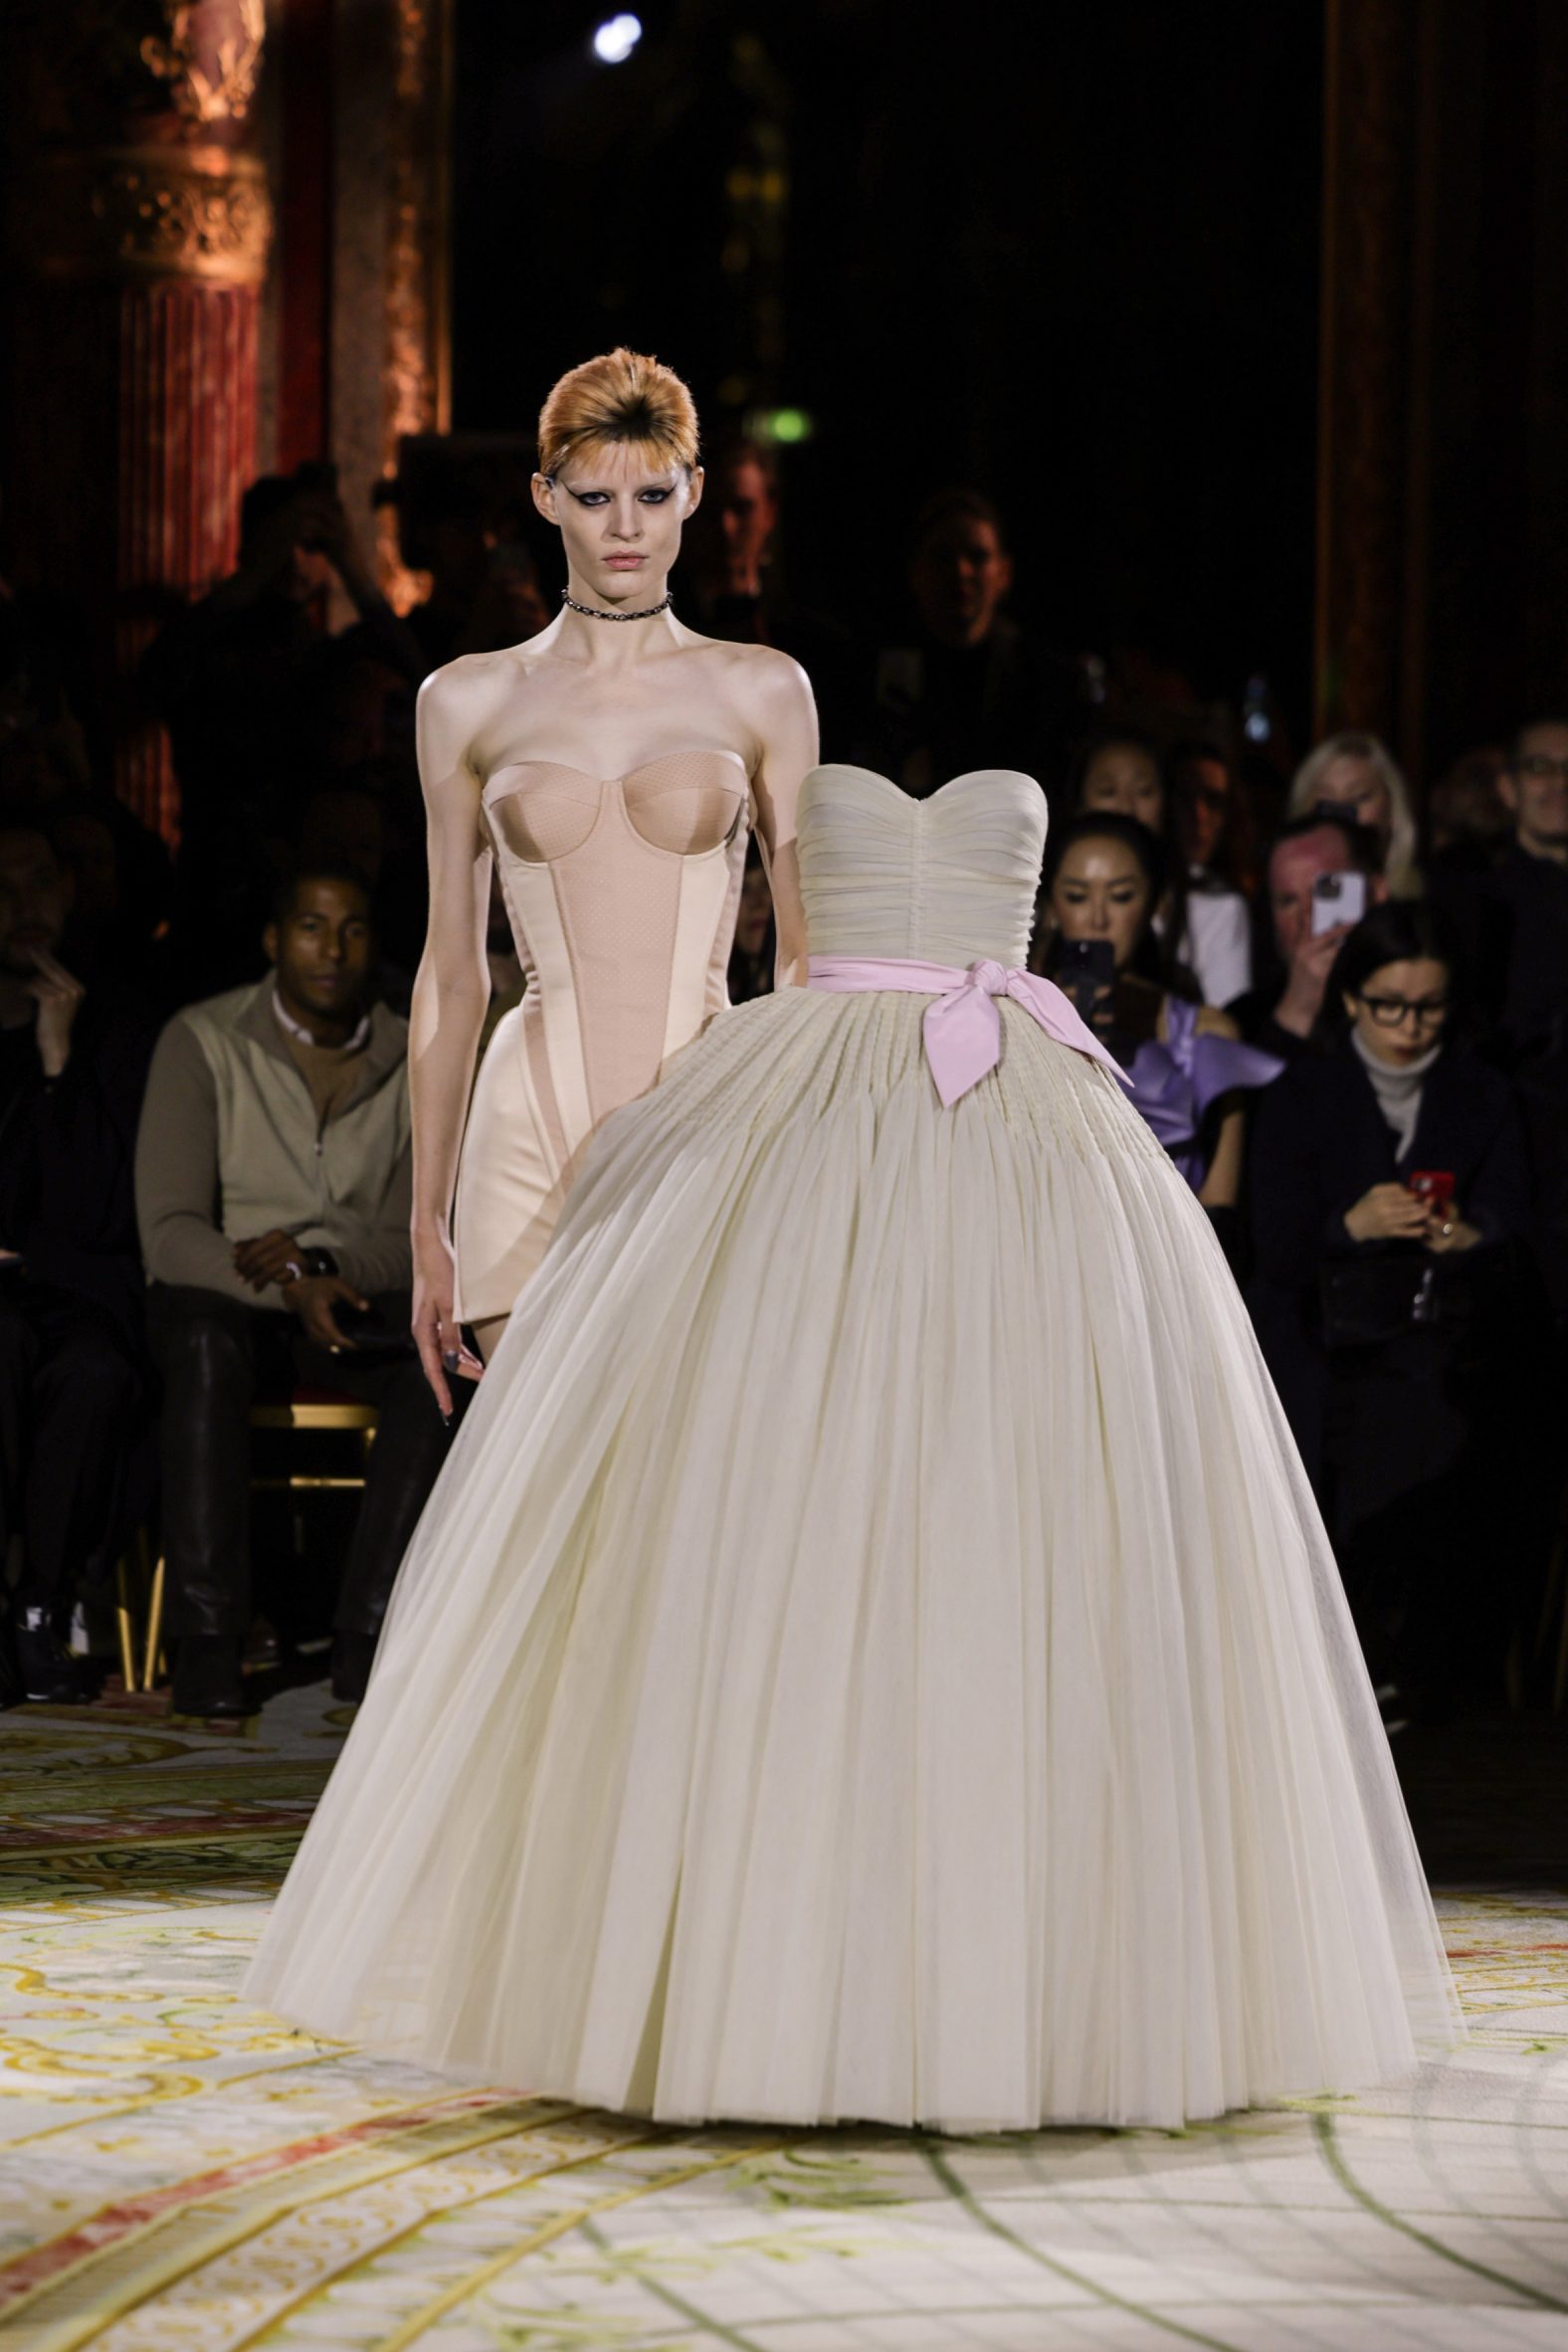 3D-printed dress positioned alongside its wearer on the catwalk